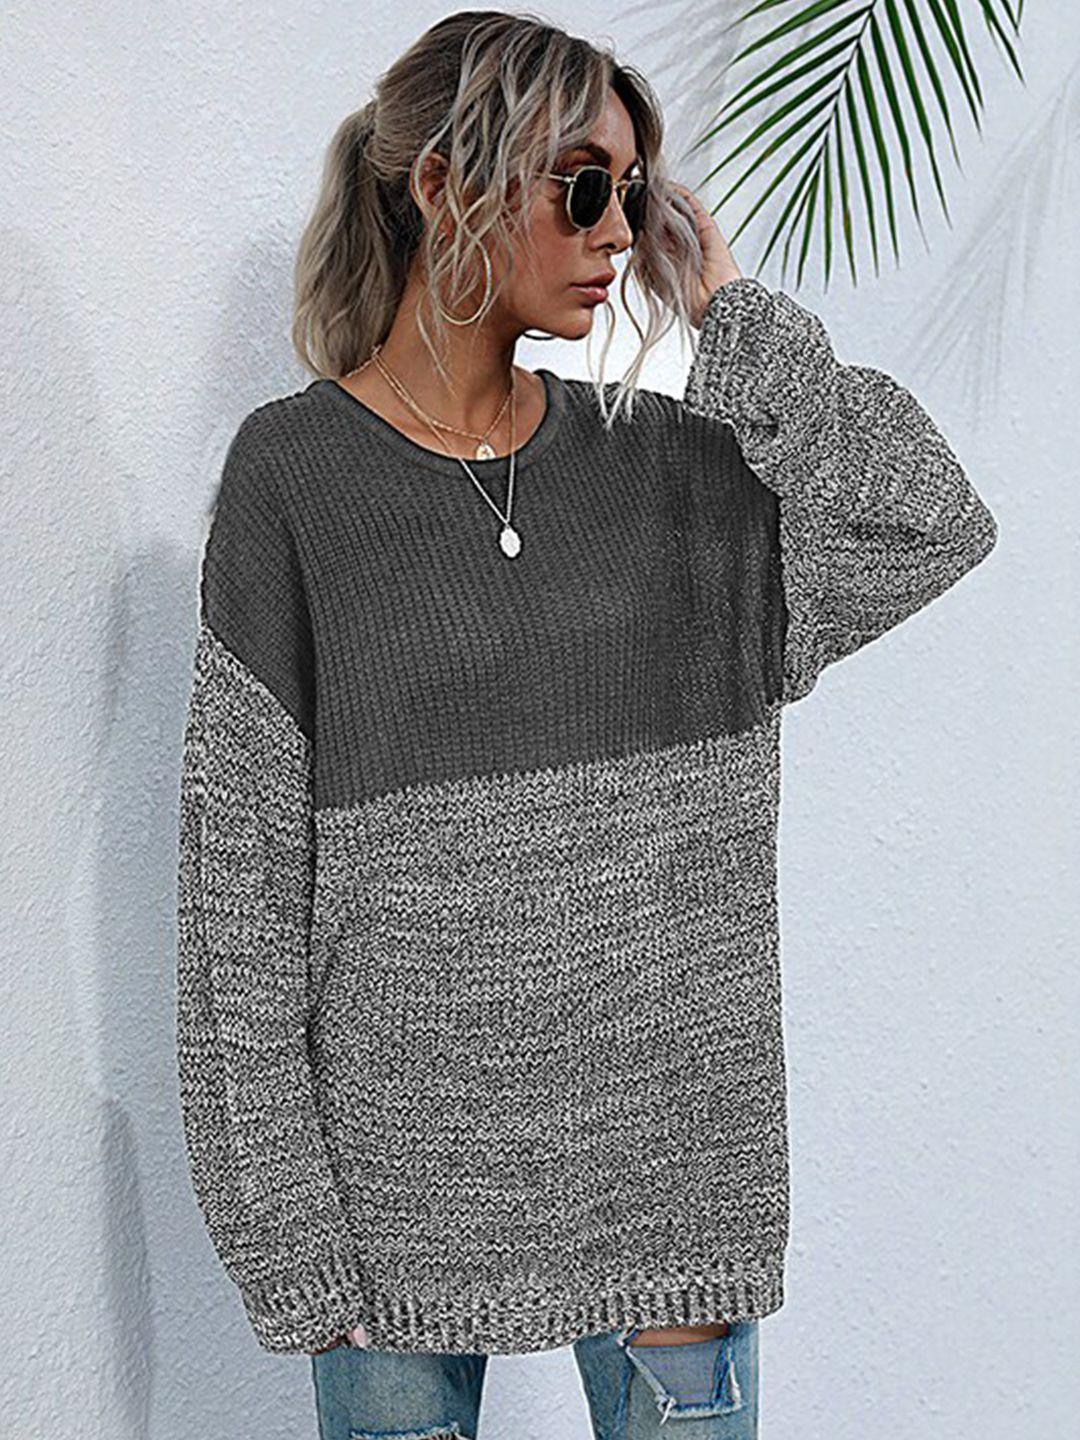 stylecast-colourblocked-longsleeves-sweater